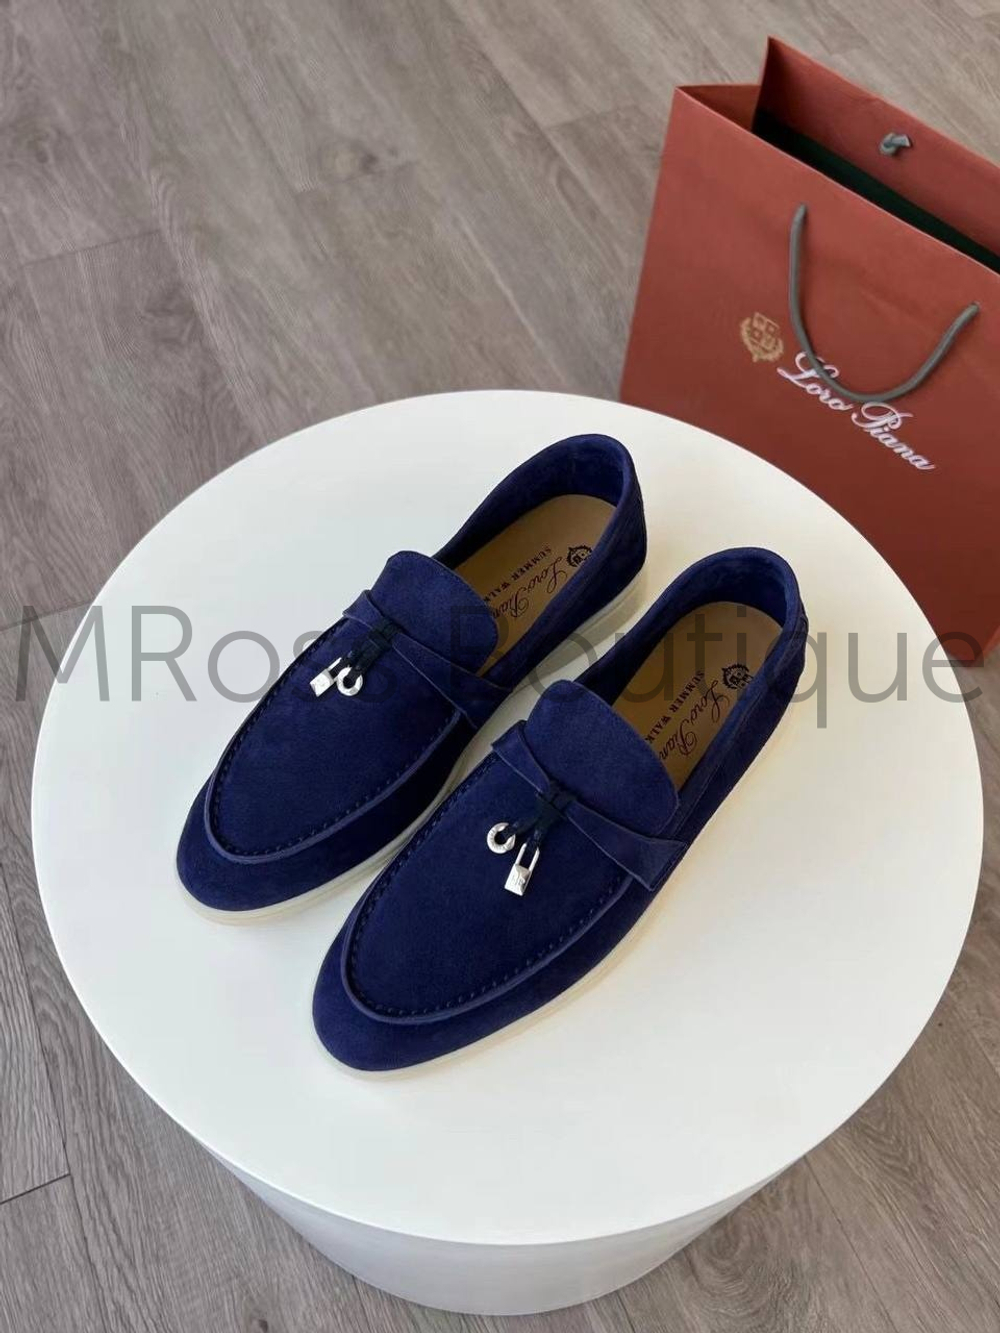 Синие замшевые лоферы Лоро Пиано премиум класса - Loro Piana Premium Blue Suede Loafers